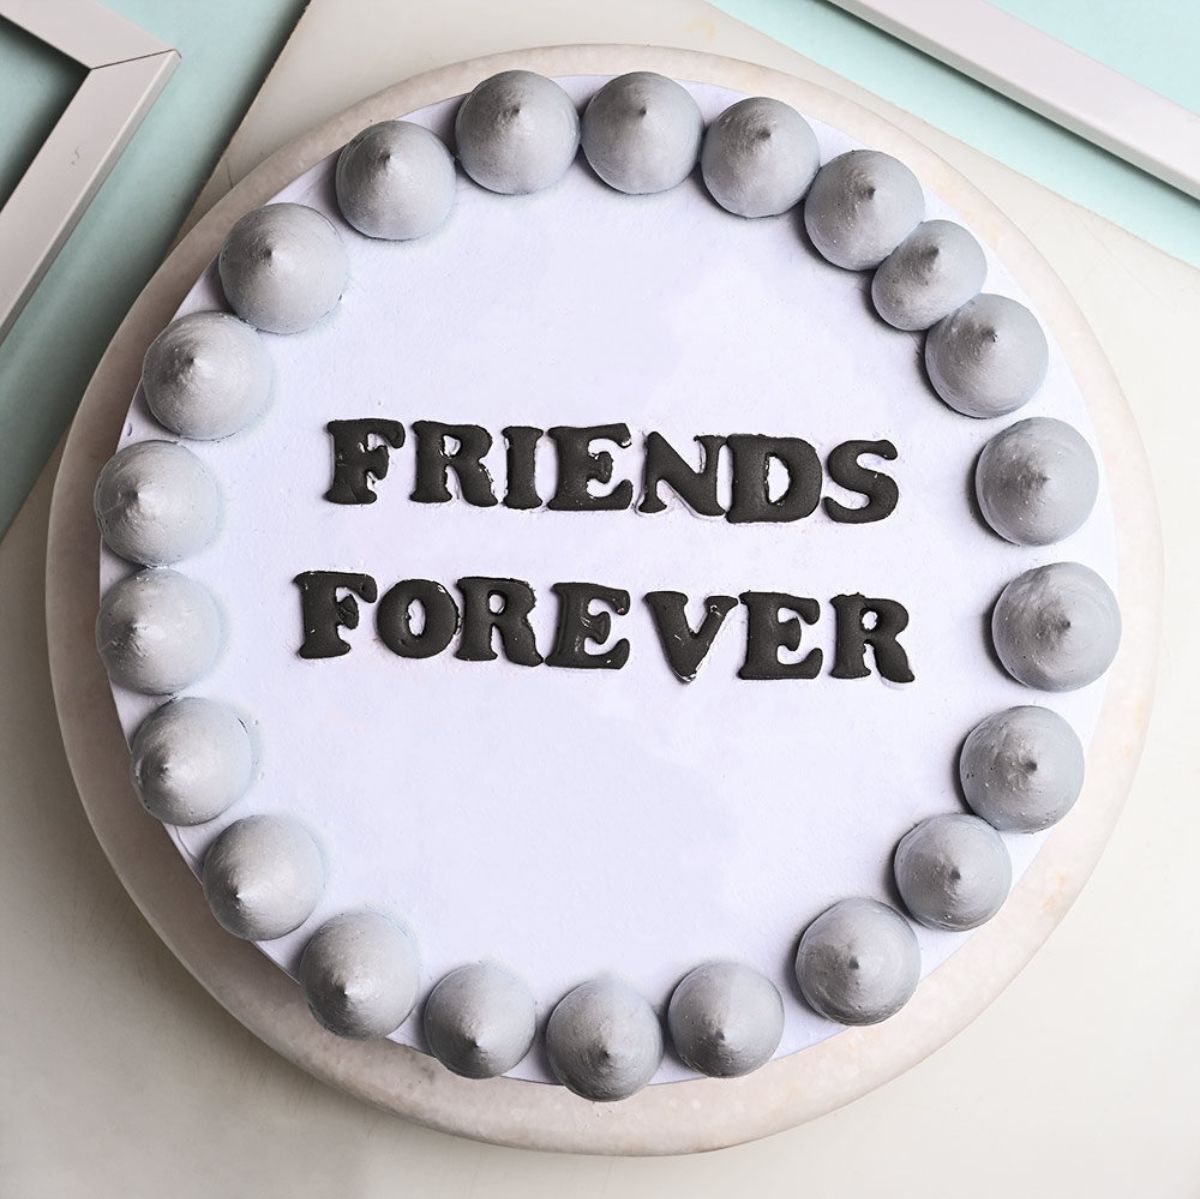 Friends Forever Poster Cake